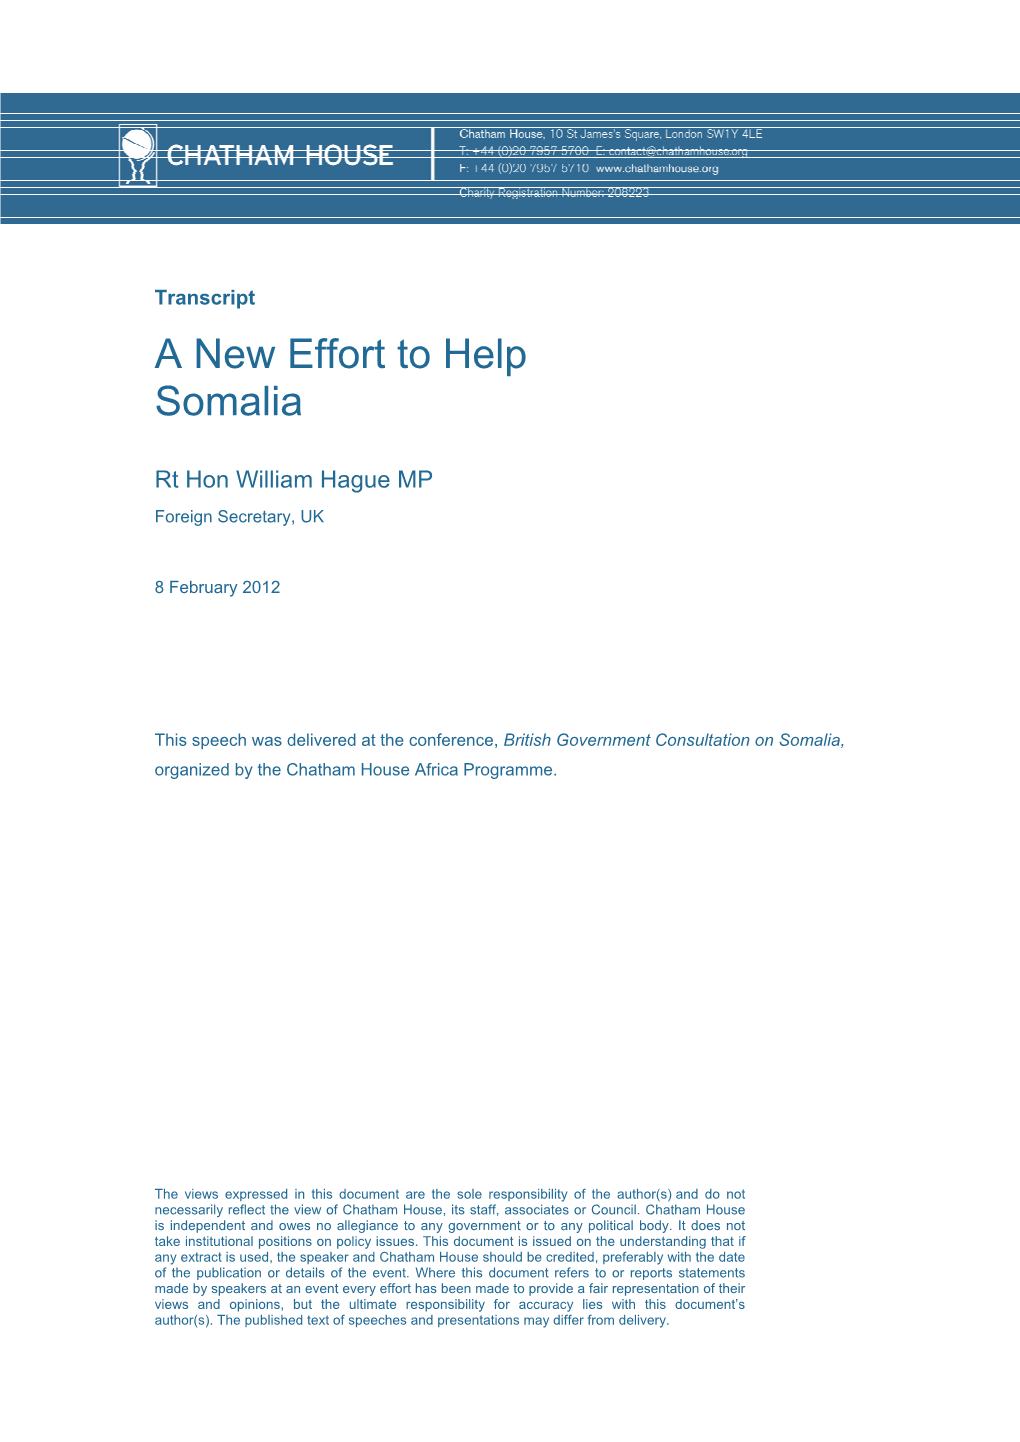 A New Effort to Help Somalia